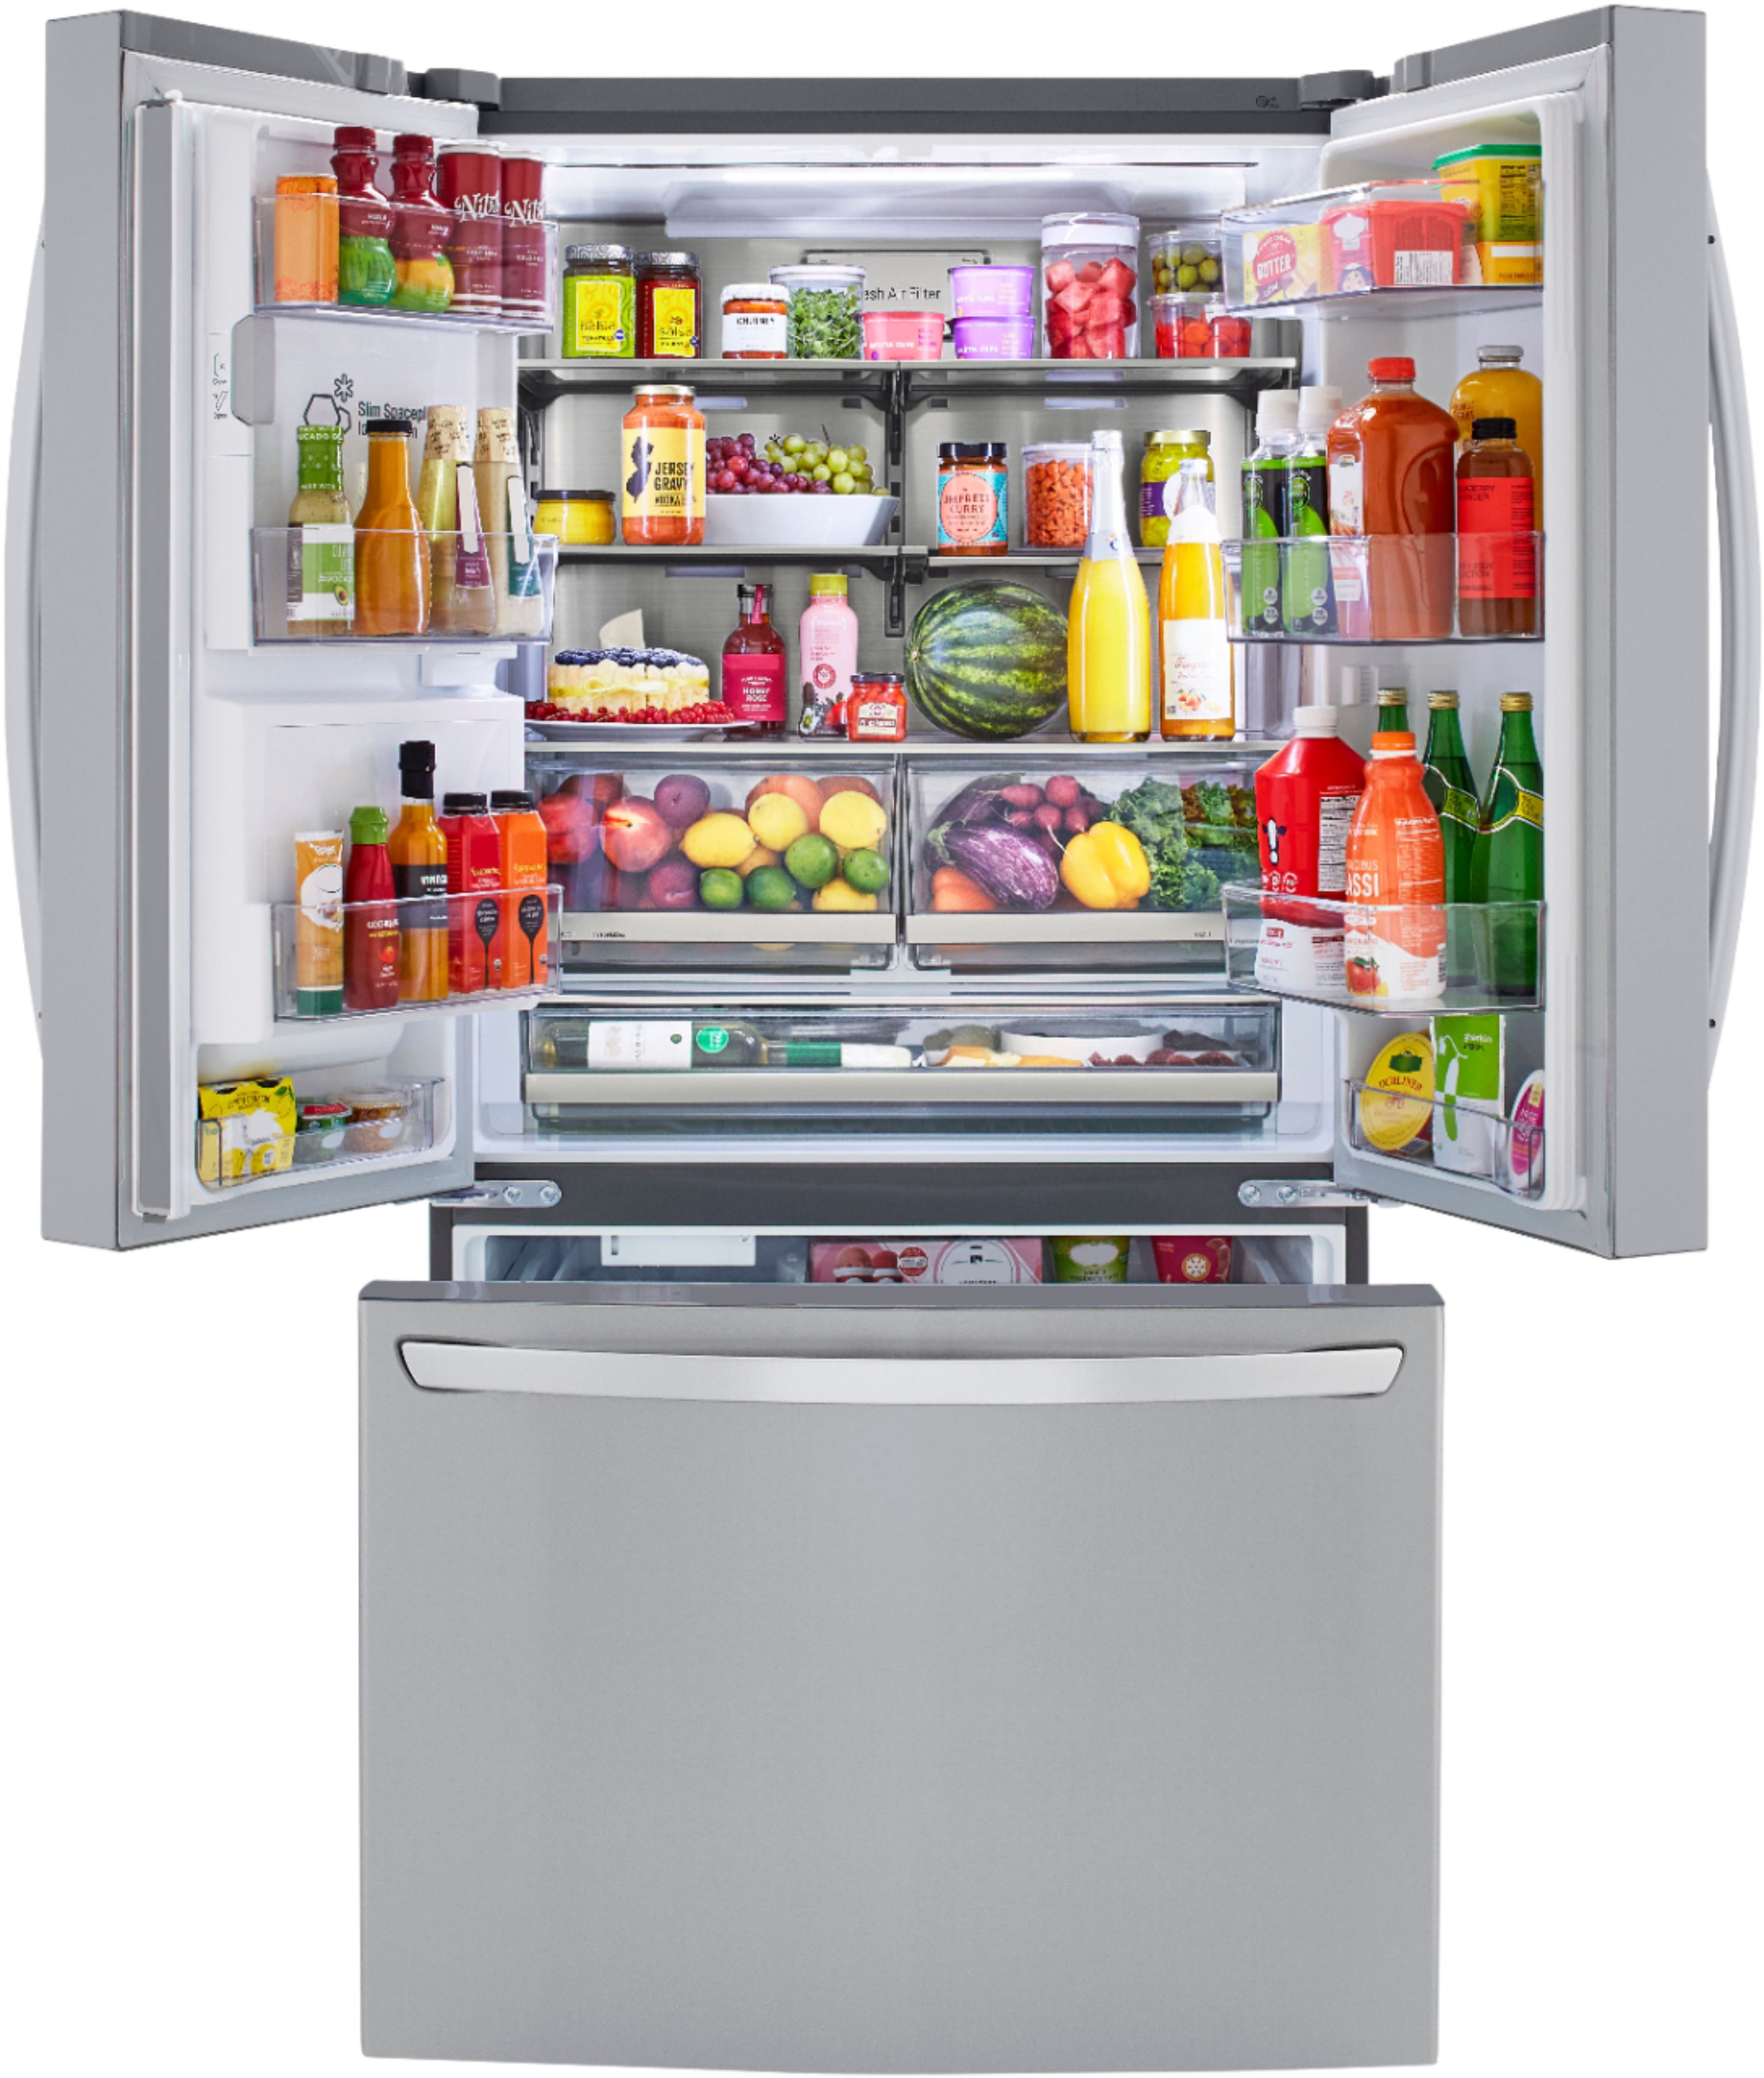 41++ Lg counter depth refrigerator in stock ideas in 2021 